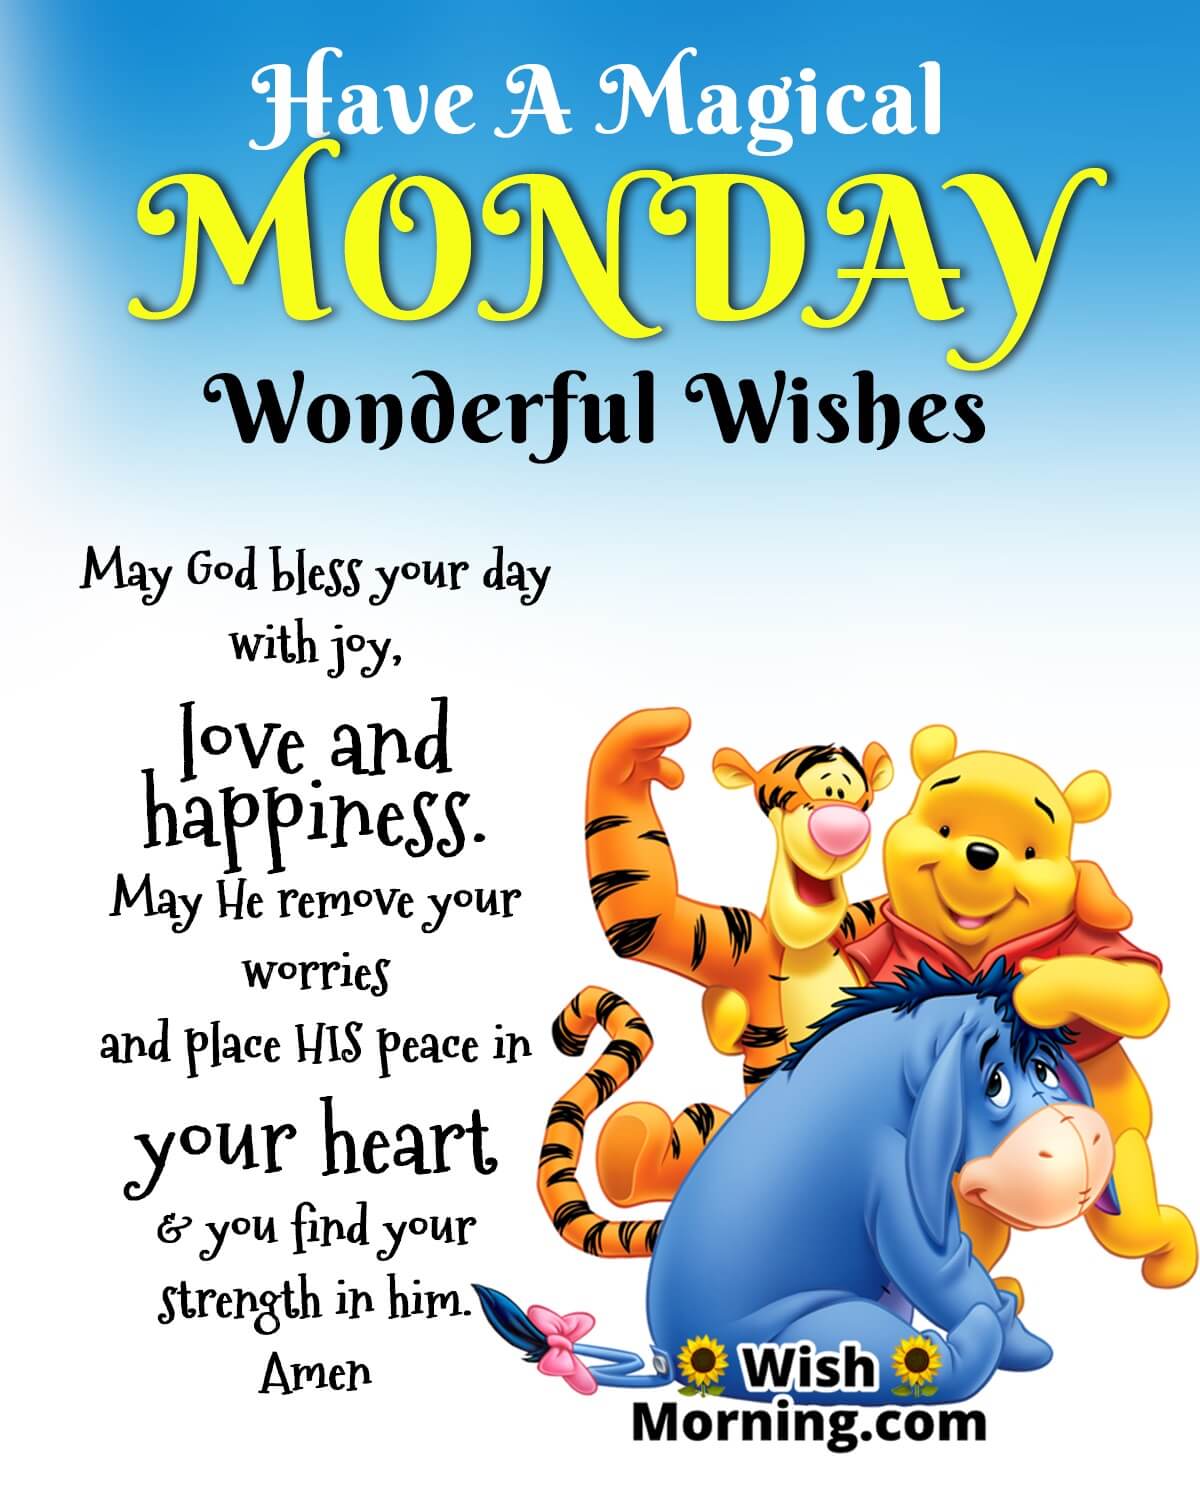 Magical Monday Wonderful Wishes